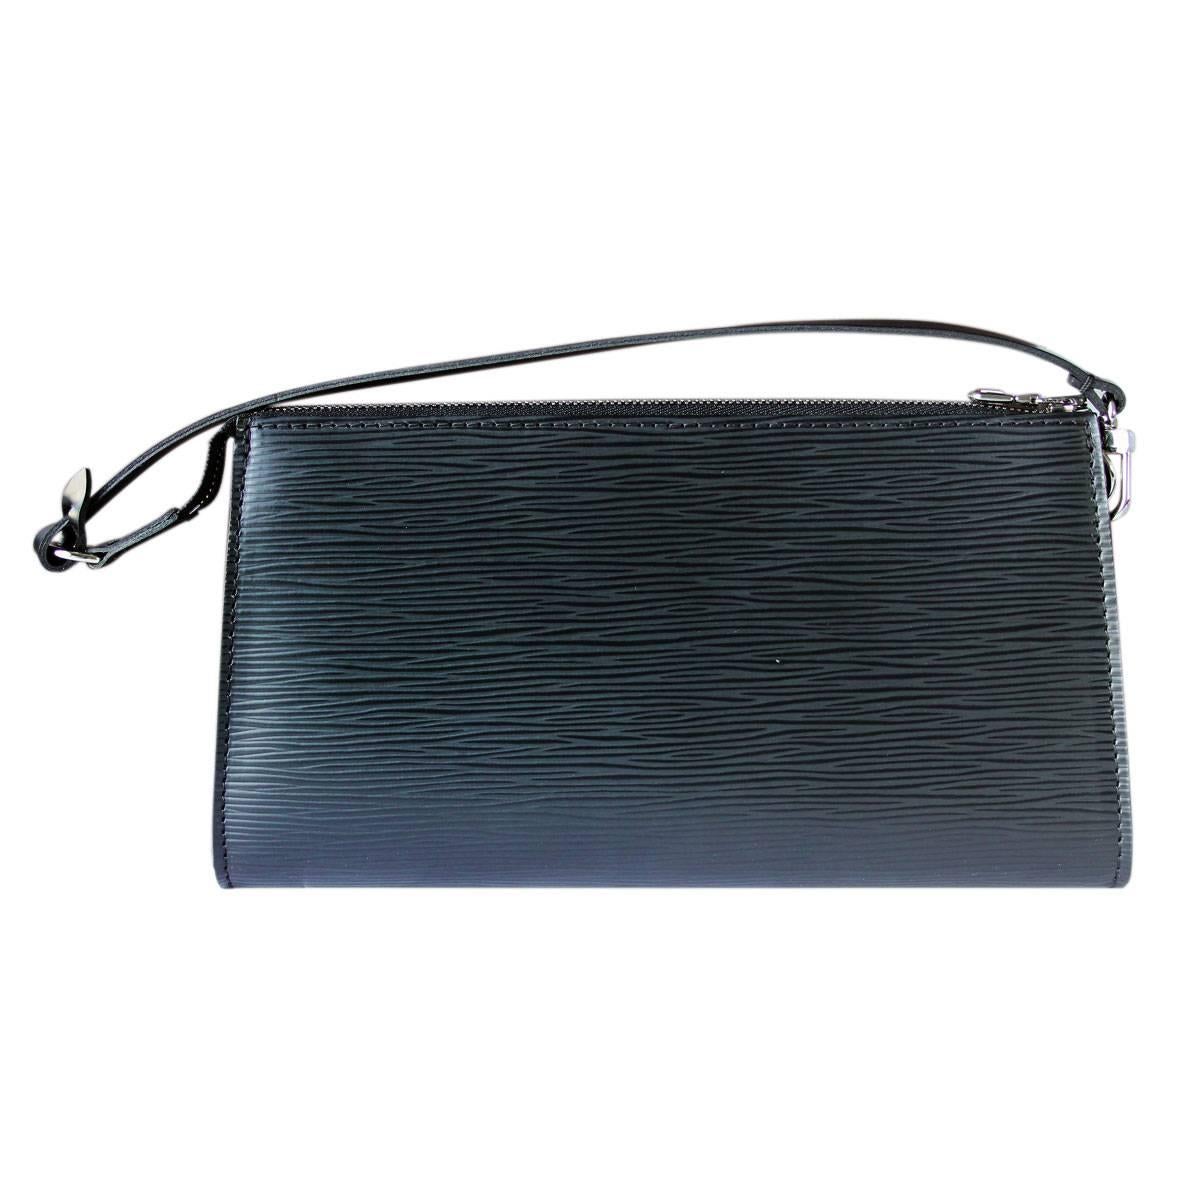 Company: Louis Vuitton
Handles: Thin Black Leather Strap Handle, Drop: 5.75